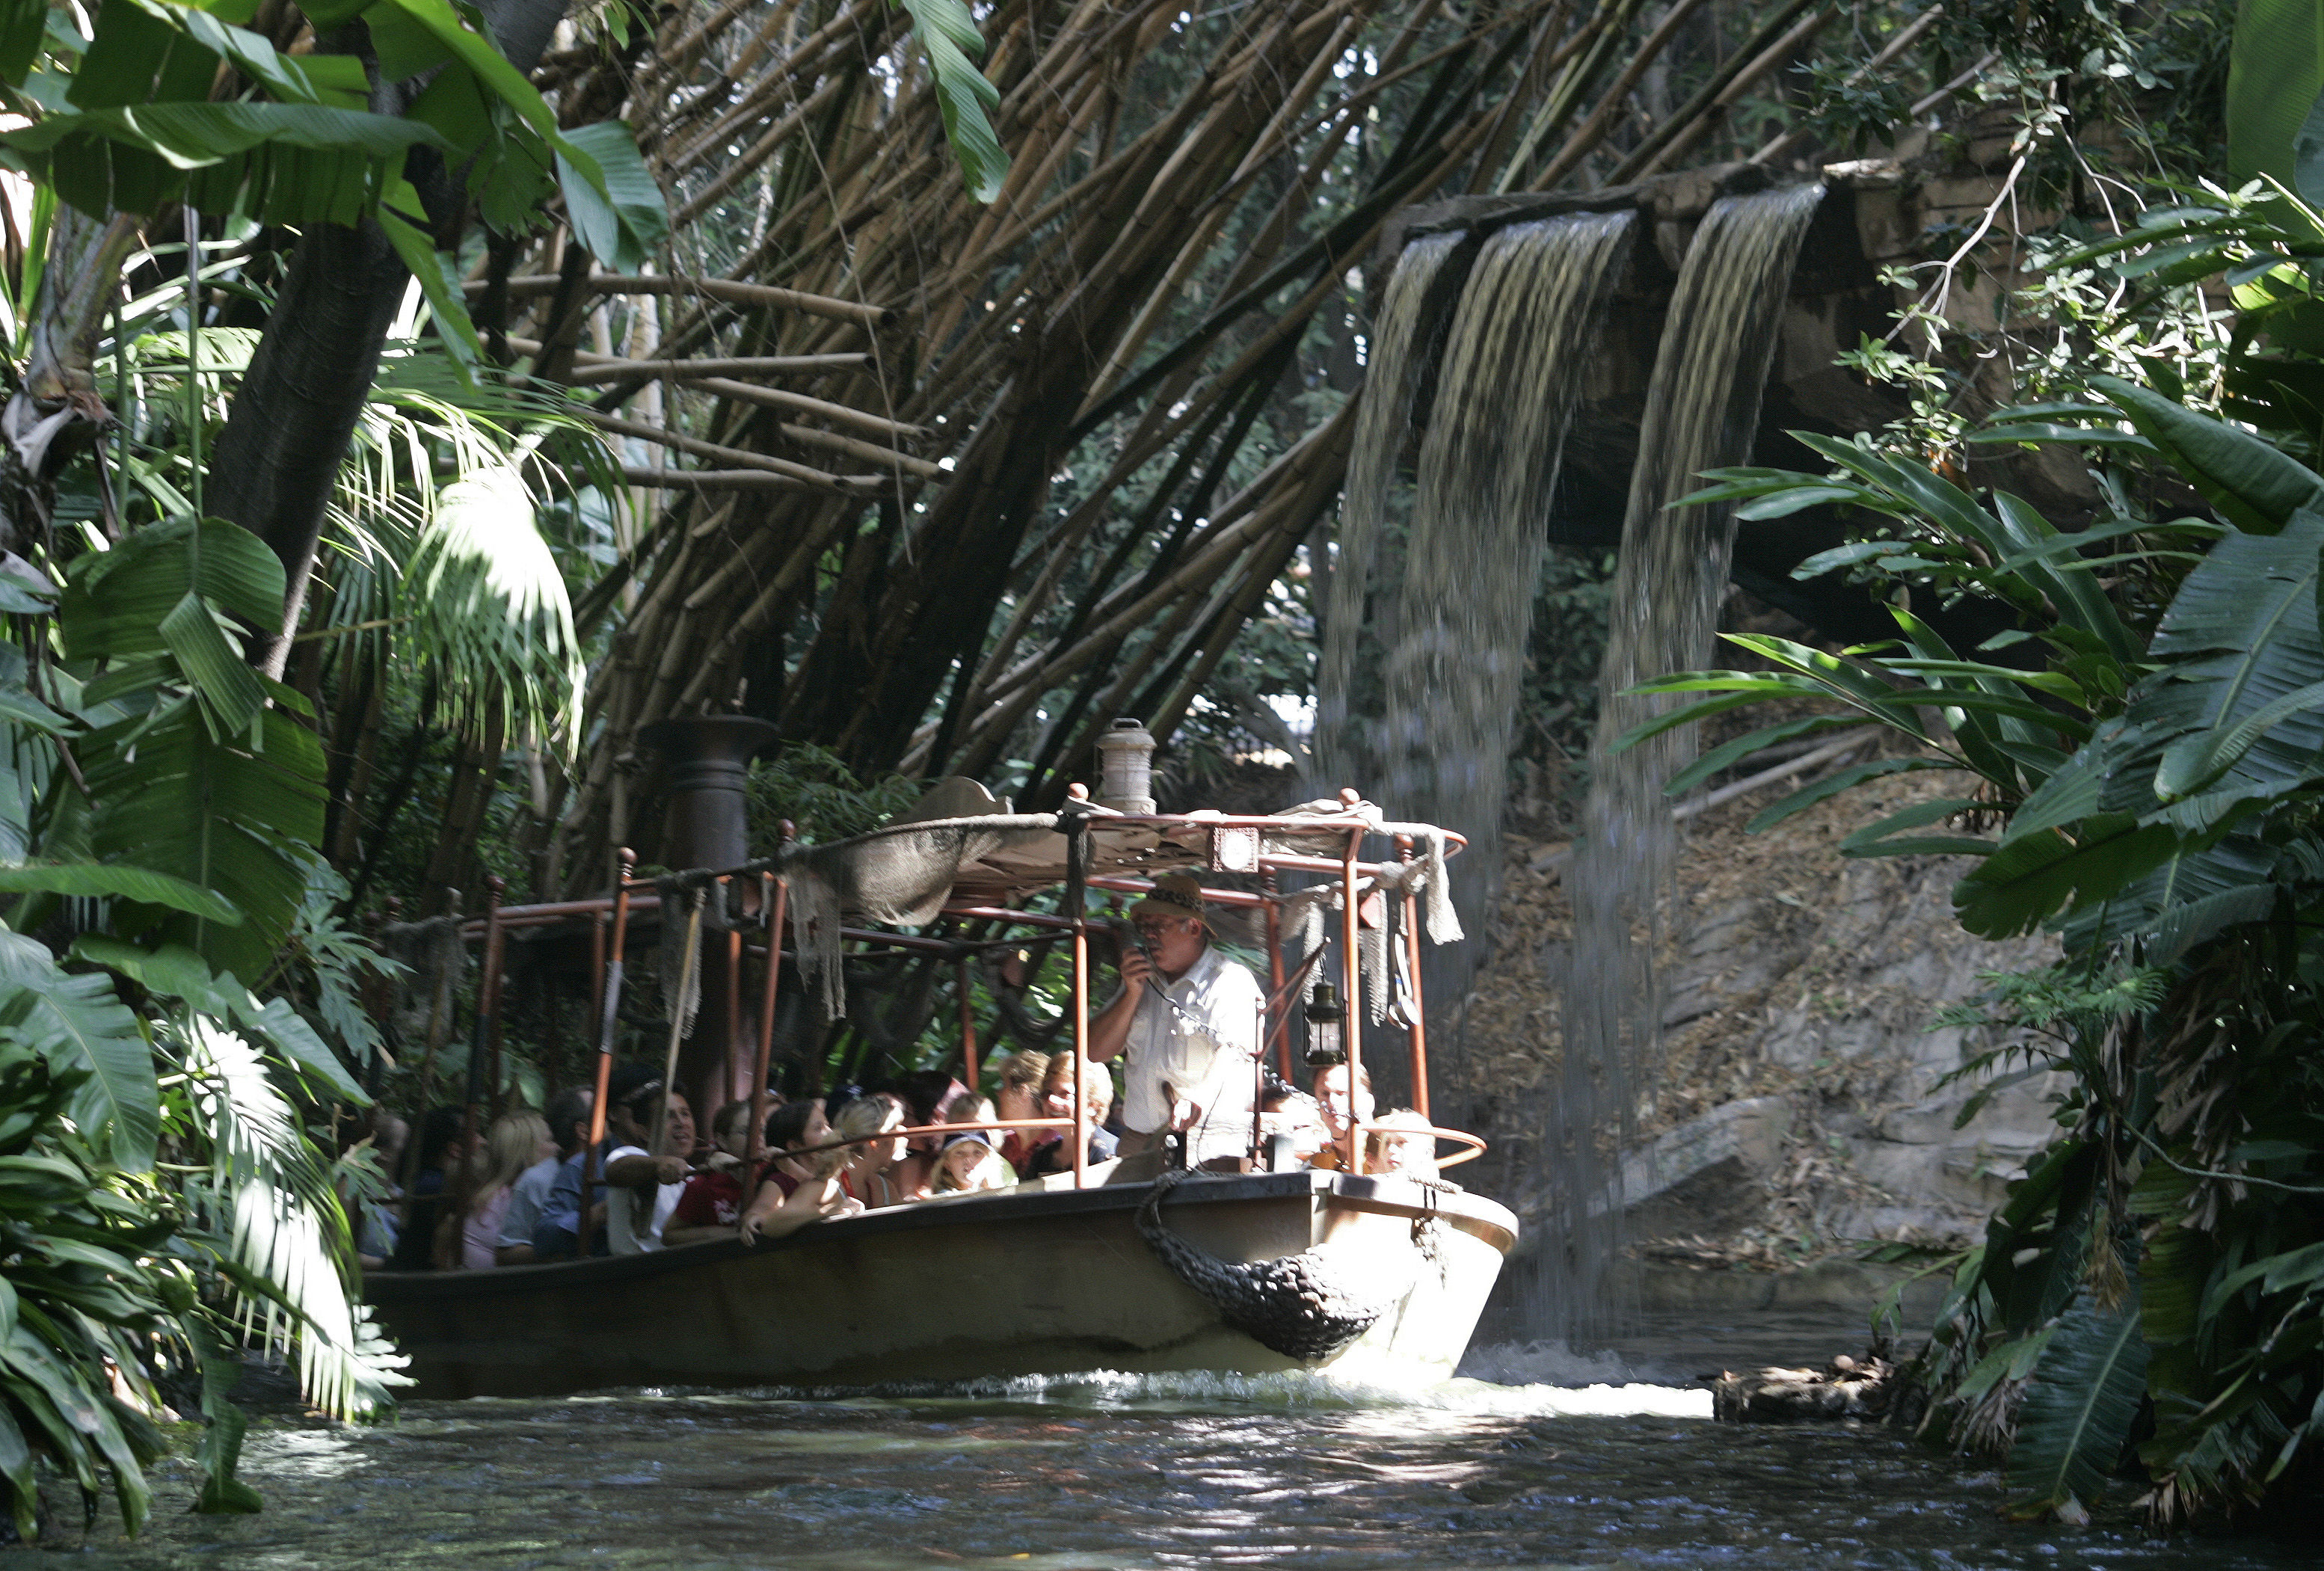 Jungle Cruise Disney ride